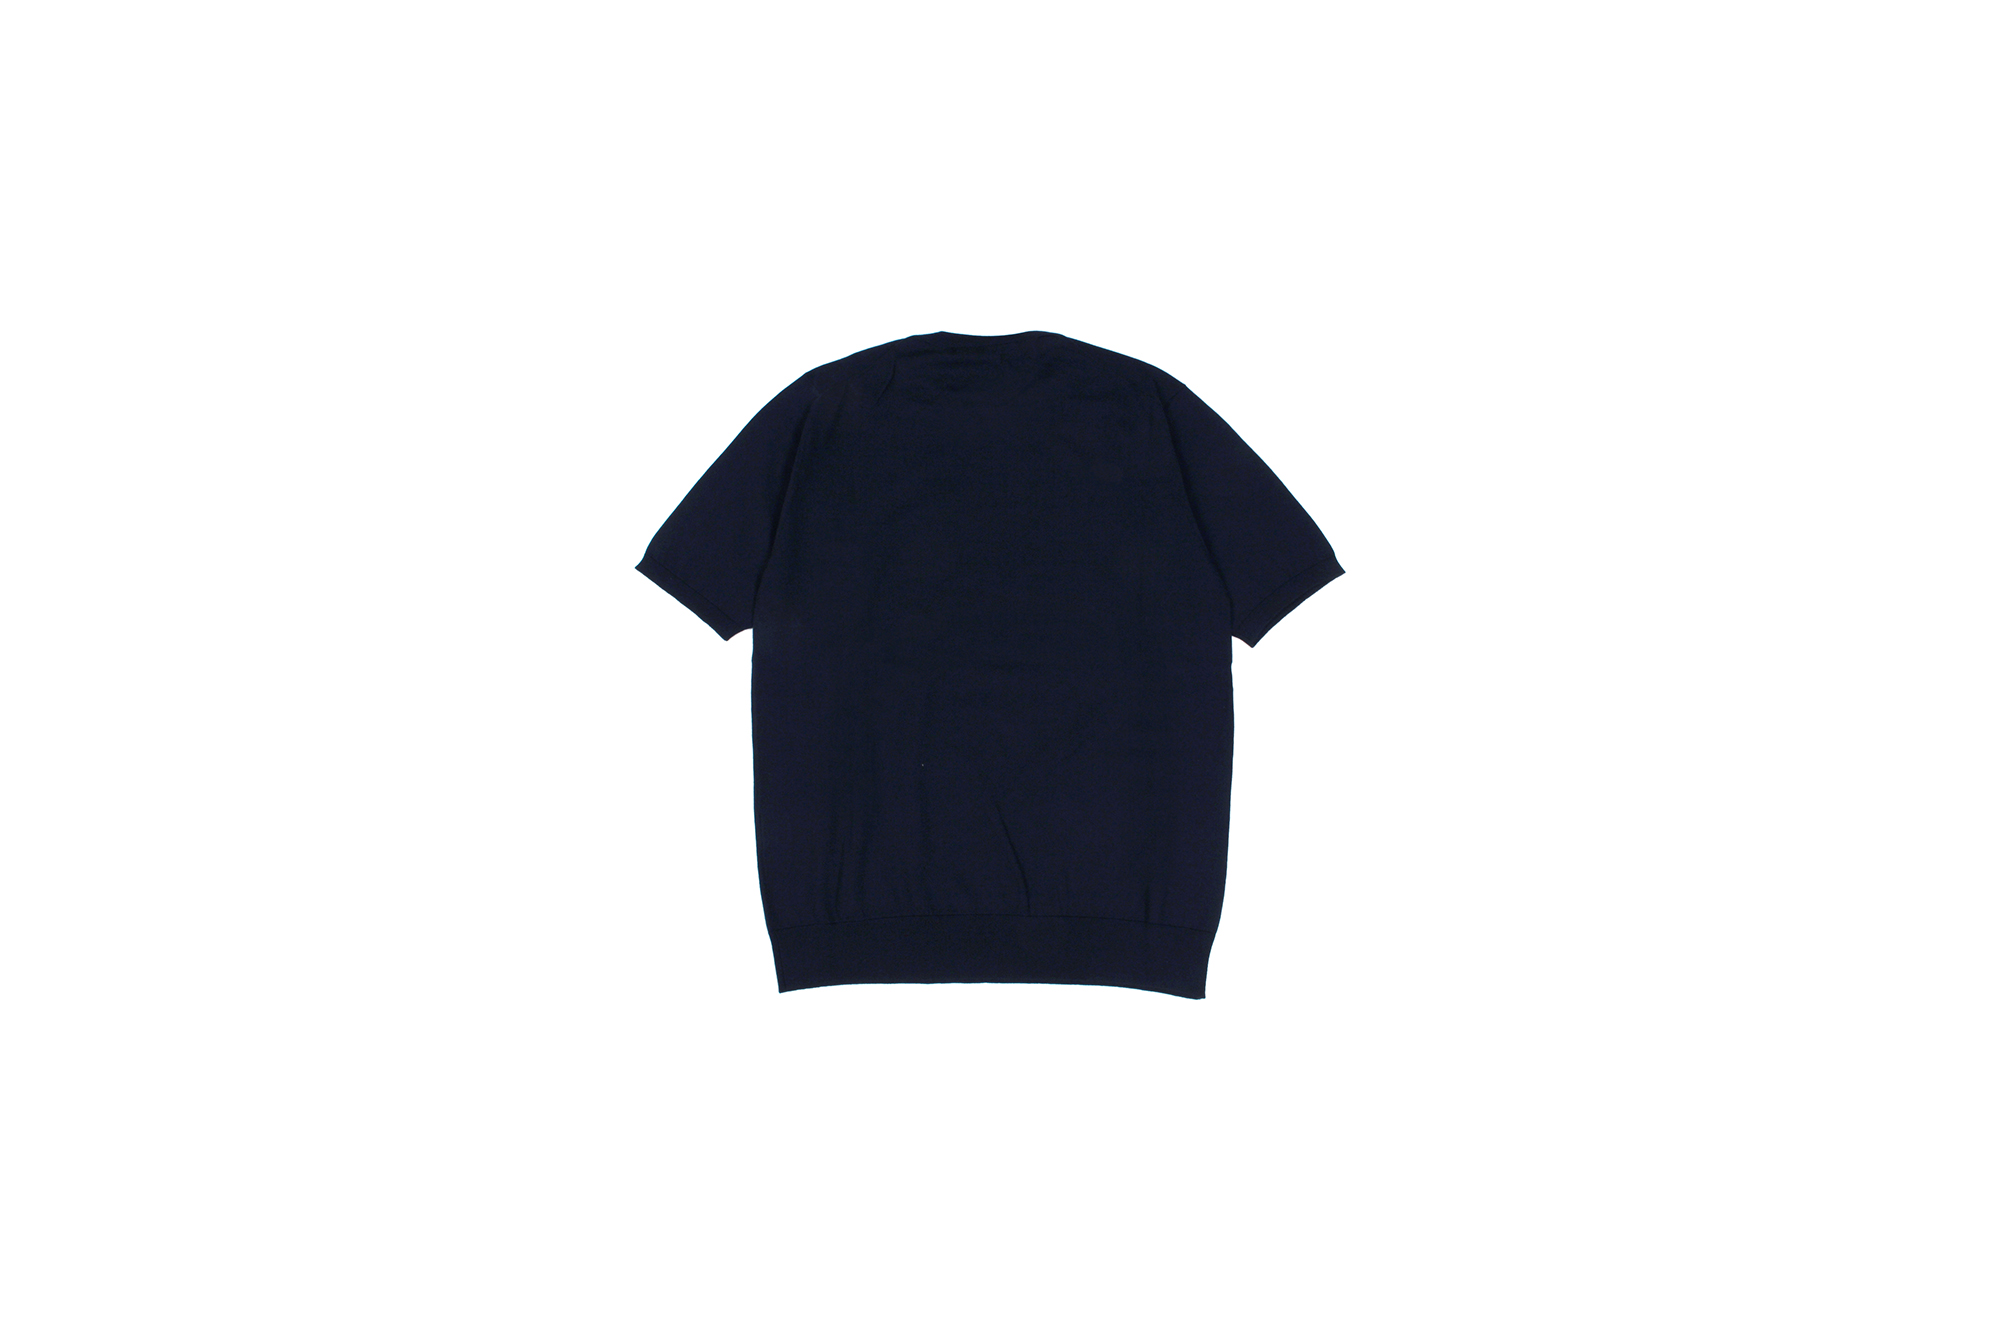 Cruciani(クルチアーニ) 33G Knit T-shirt 33ゲージ コットン ニット Tシャツ NAVY (ネイビー・Z0064)  made in italy (イタリア製) 2020 春夏新作  愛知 名古屋 altoediritto アルトエデリット ニットTEE